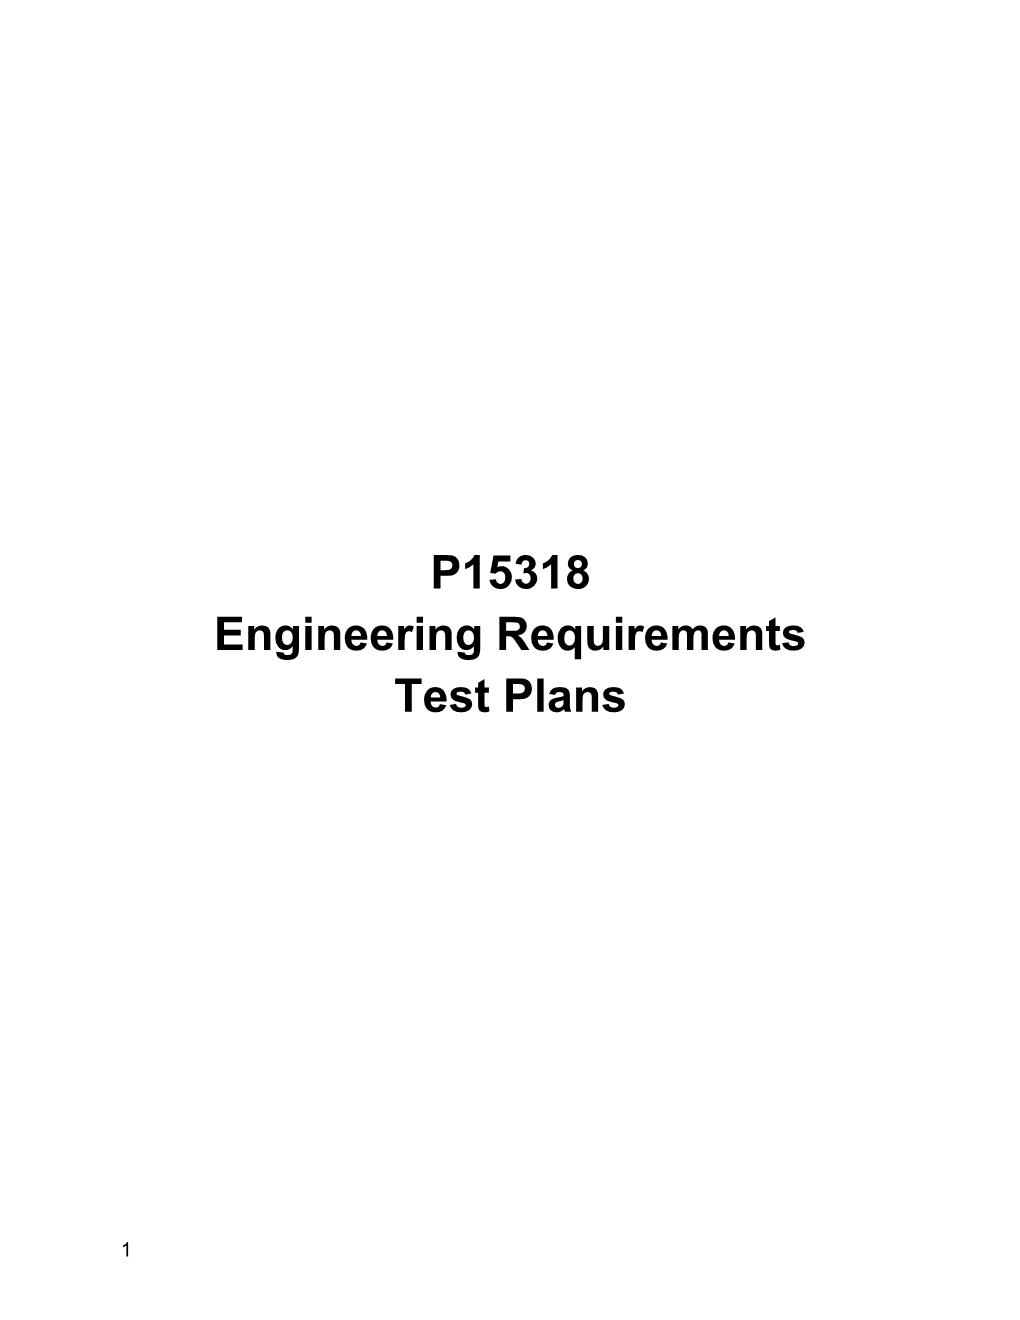 P15318 Phase IV Test Planning